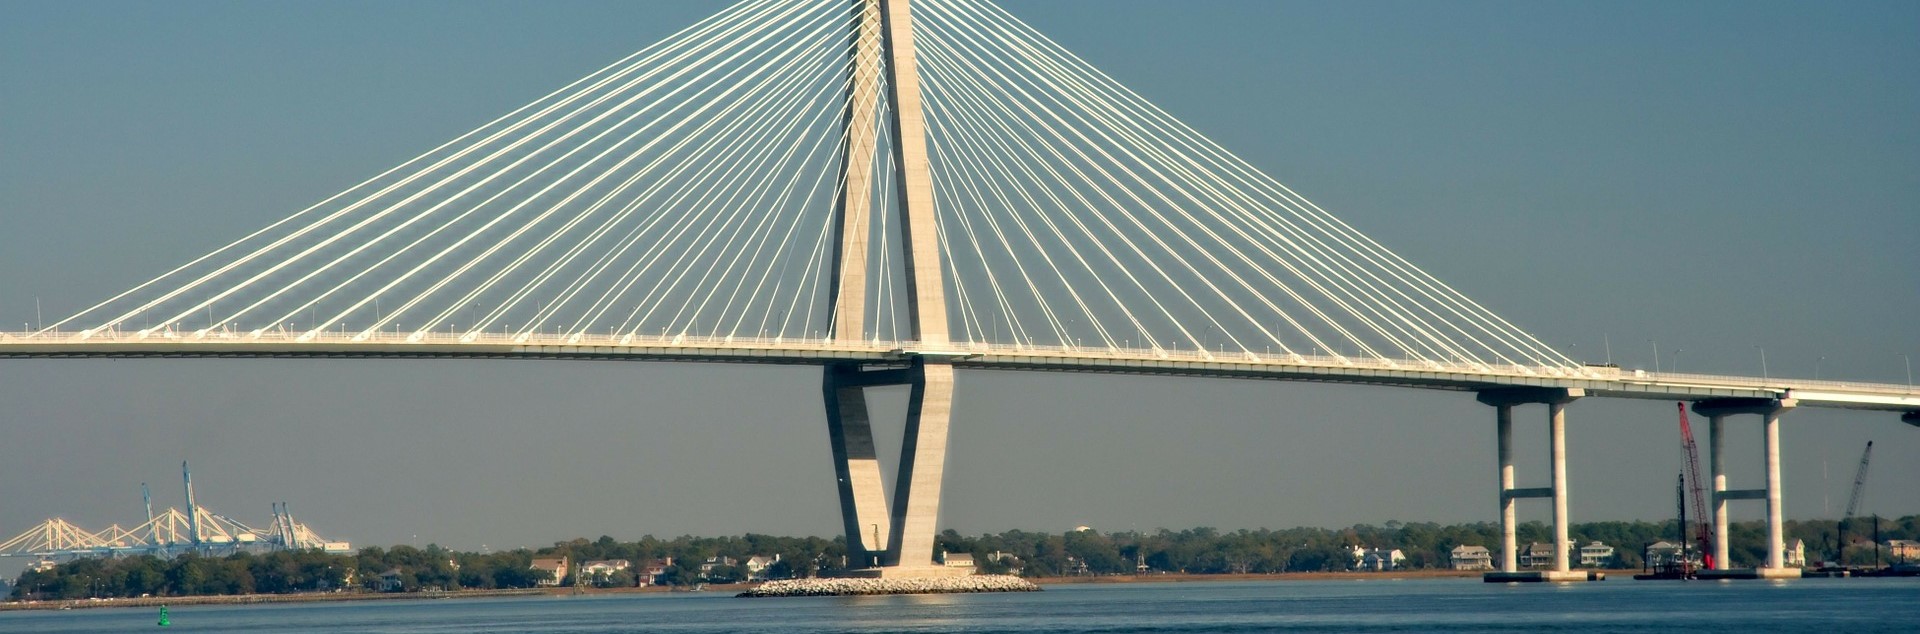 Suspension Bridge in Charleston, South Carolina | Breast Cancer Car Donations